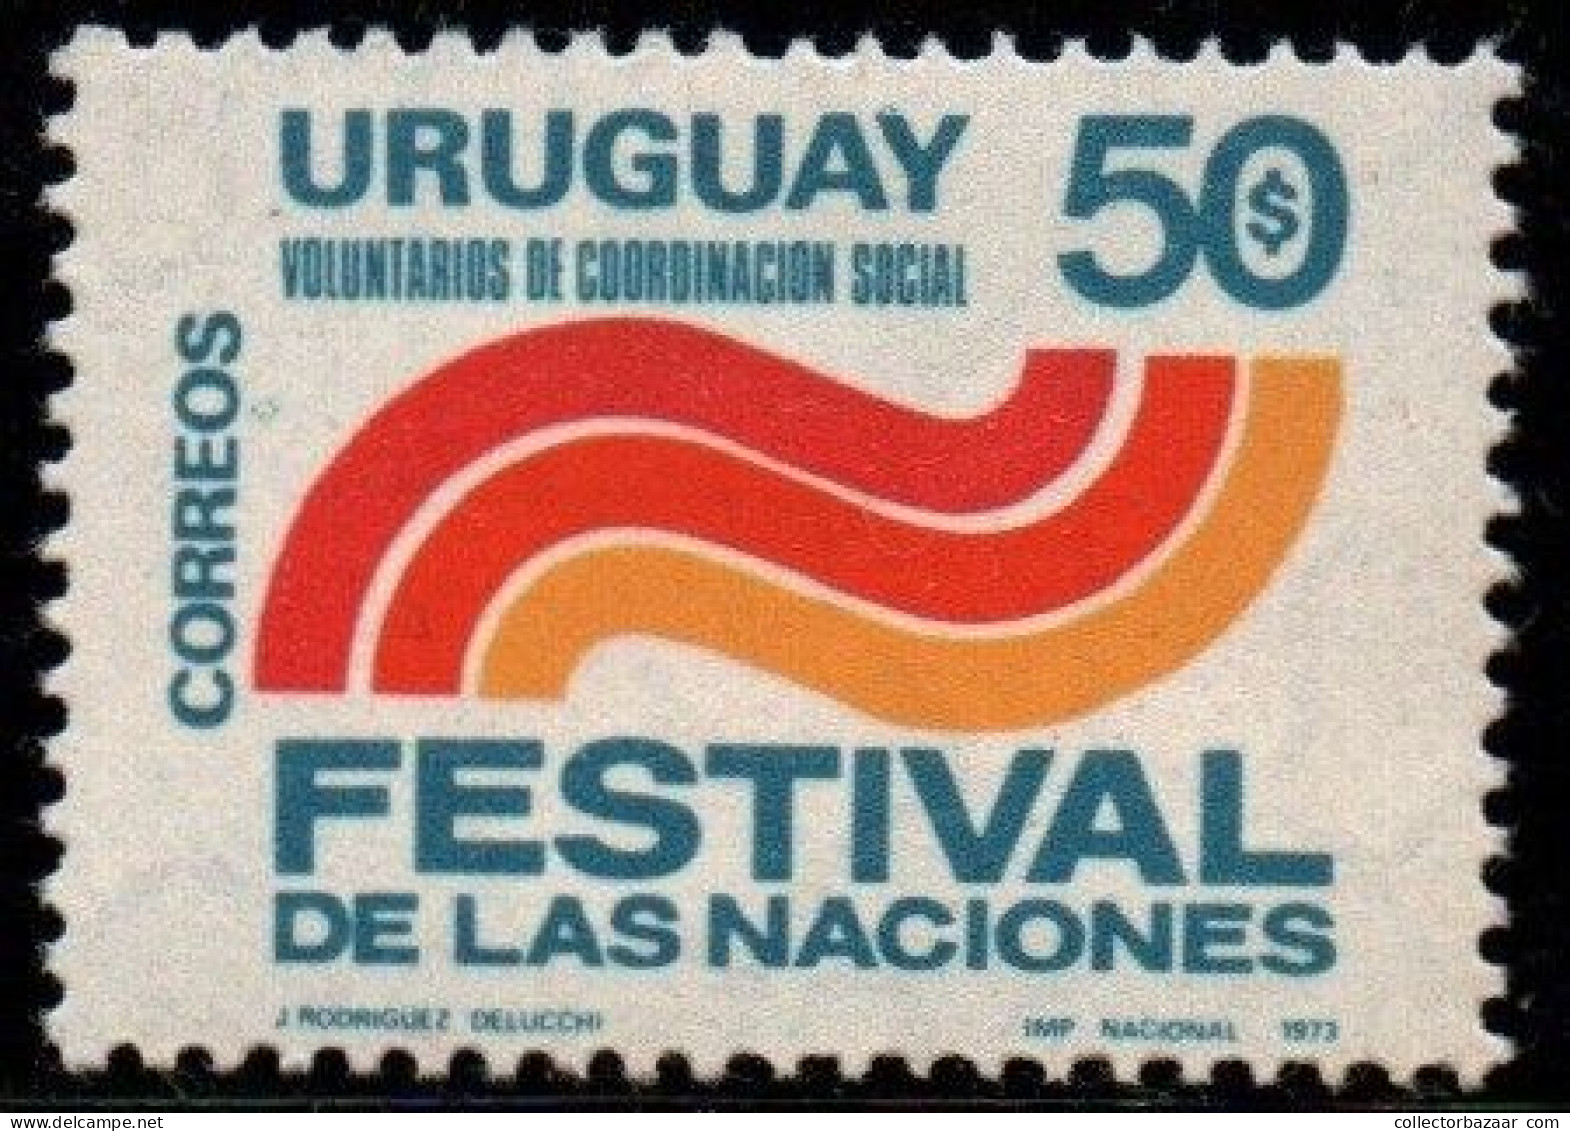 1973 Uruguay Emblem Of Social Coordination Volunteers  #867 ** MNH - Uruguay